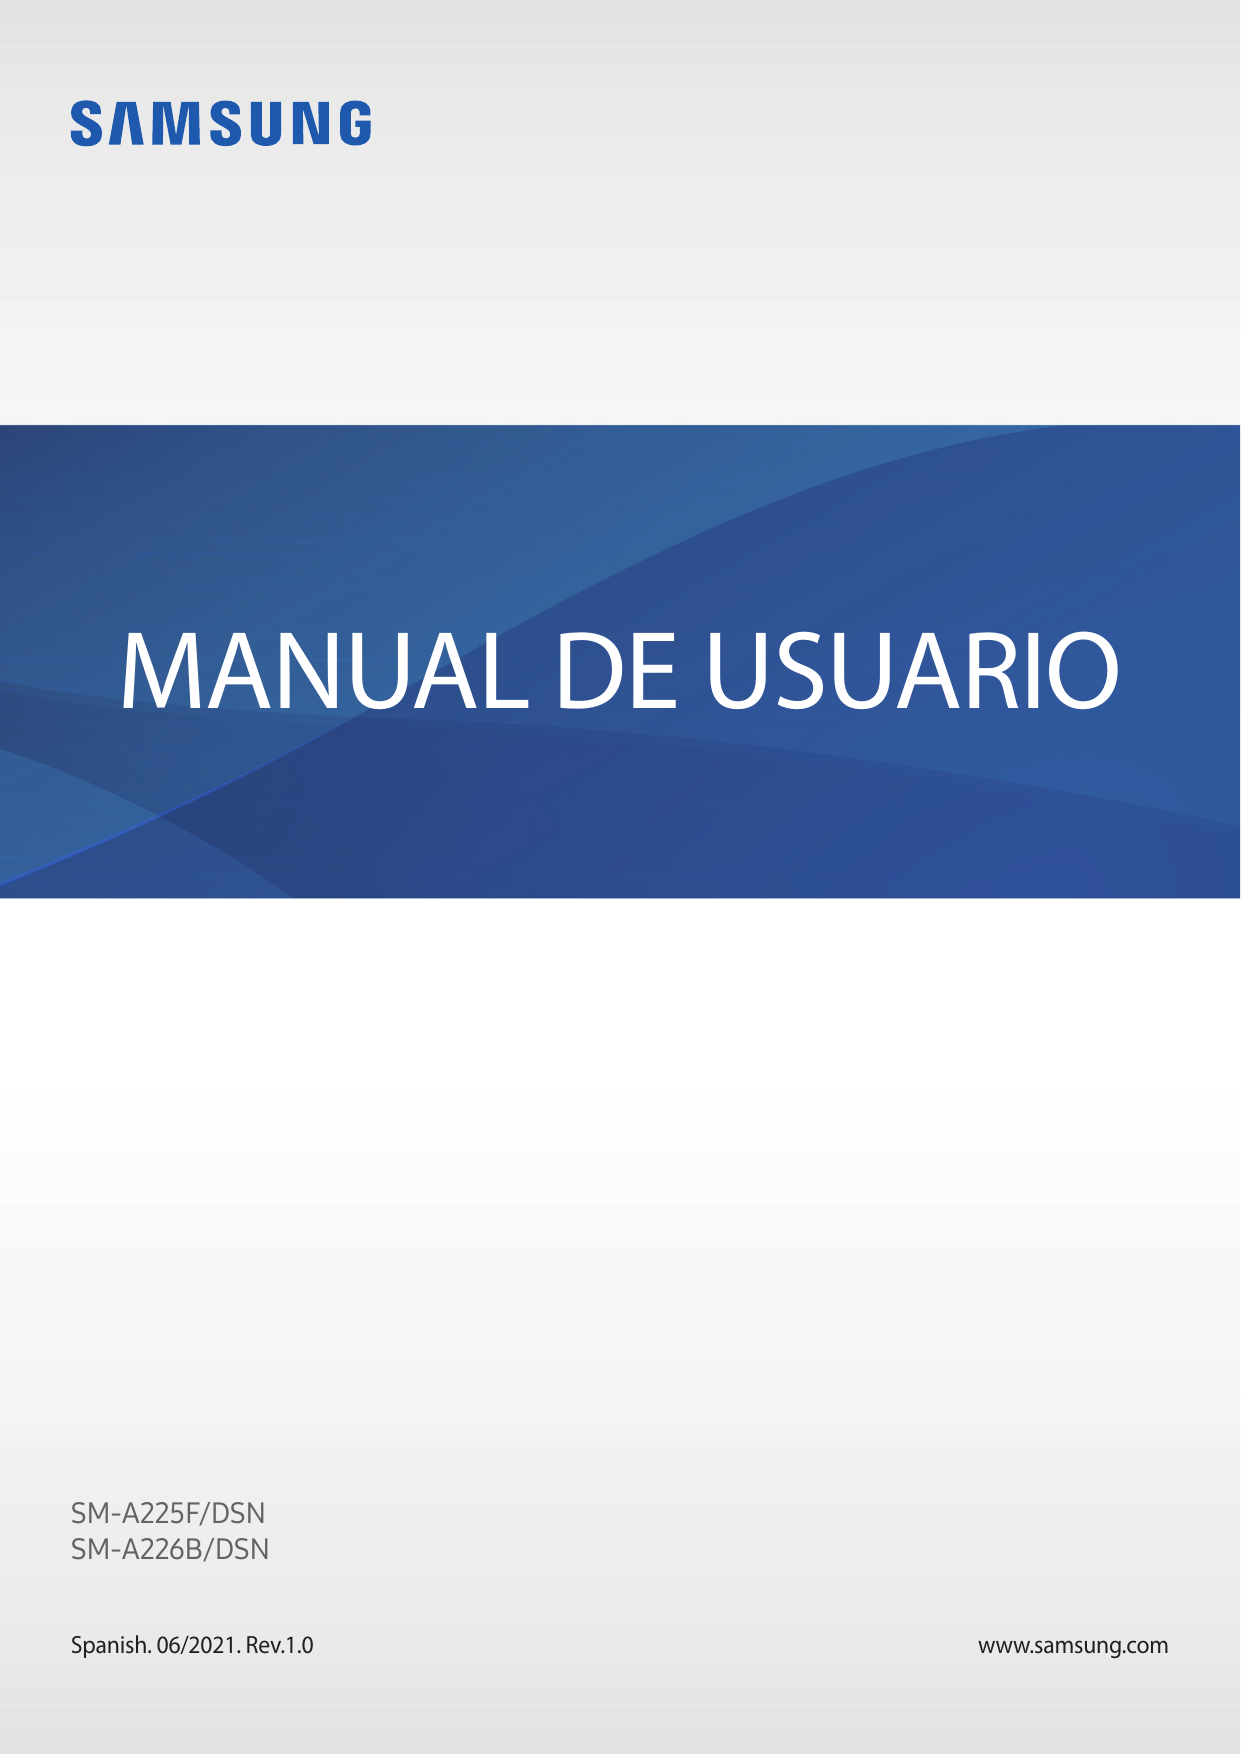 MANUAL DE USUARIOSM-A225F/DSNSM-A226B/DSNSpanish. 06/2021. Rev.1.0www.samsung.com